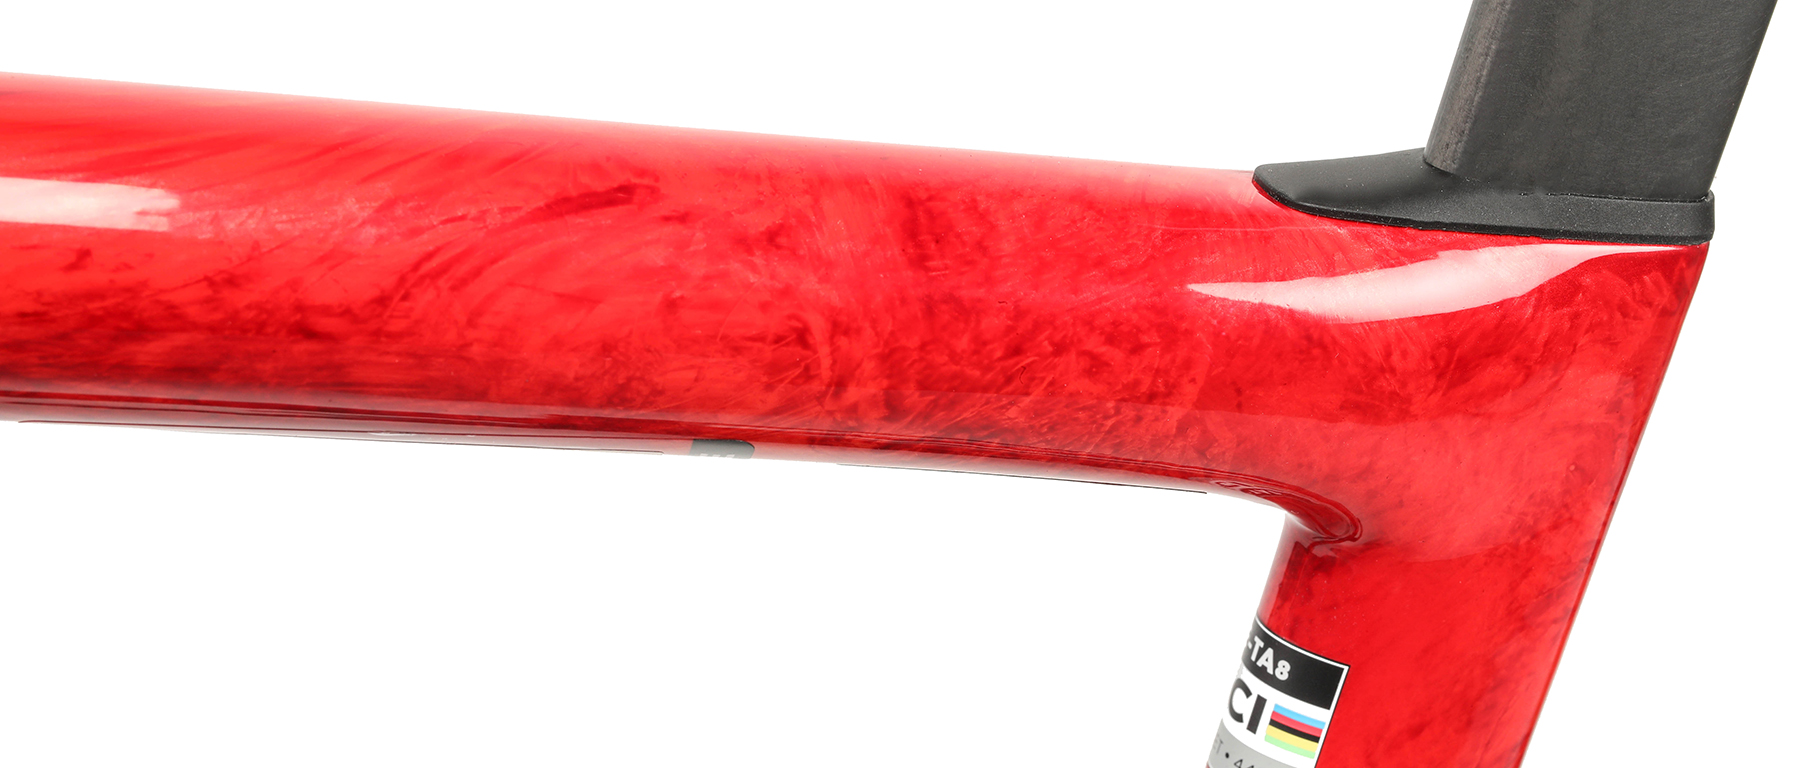 Specialized S-Works Tarmac SL8 Red eTap AXS Bicycle